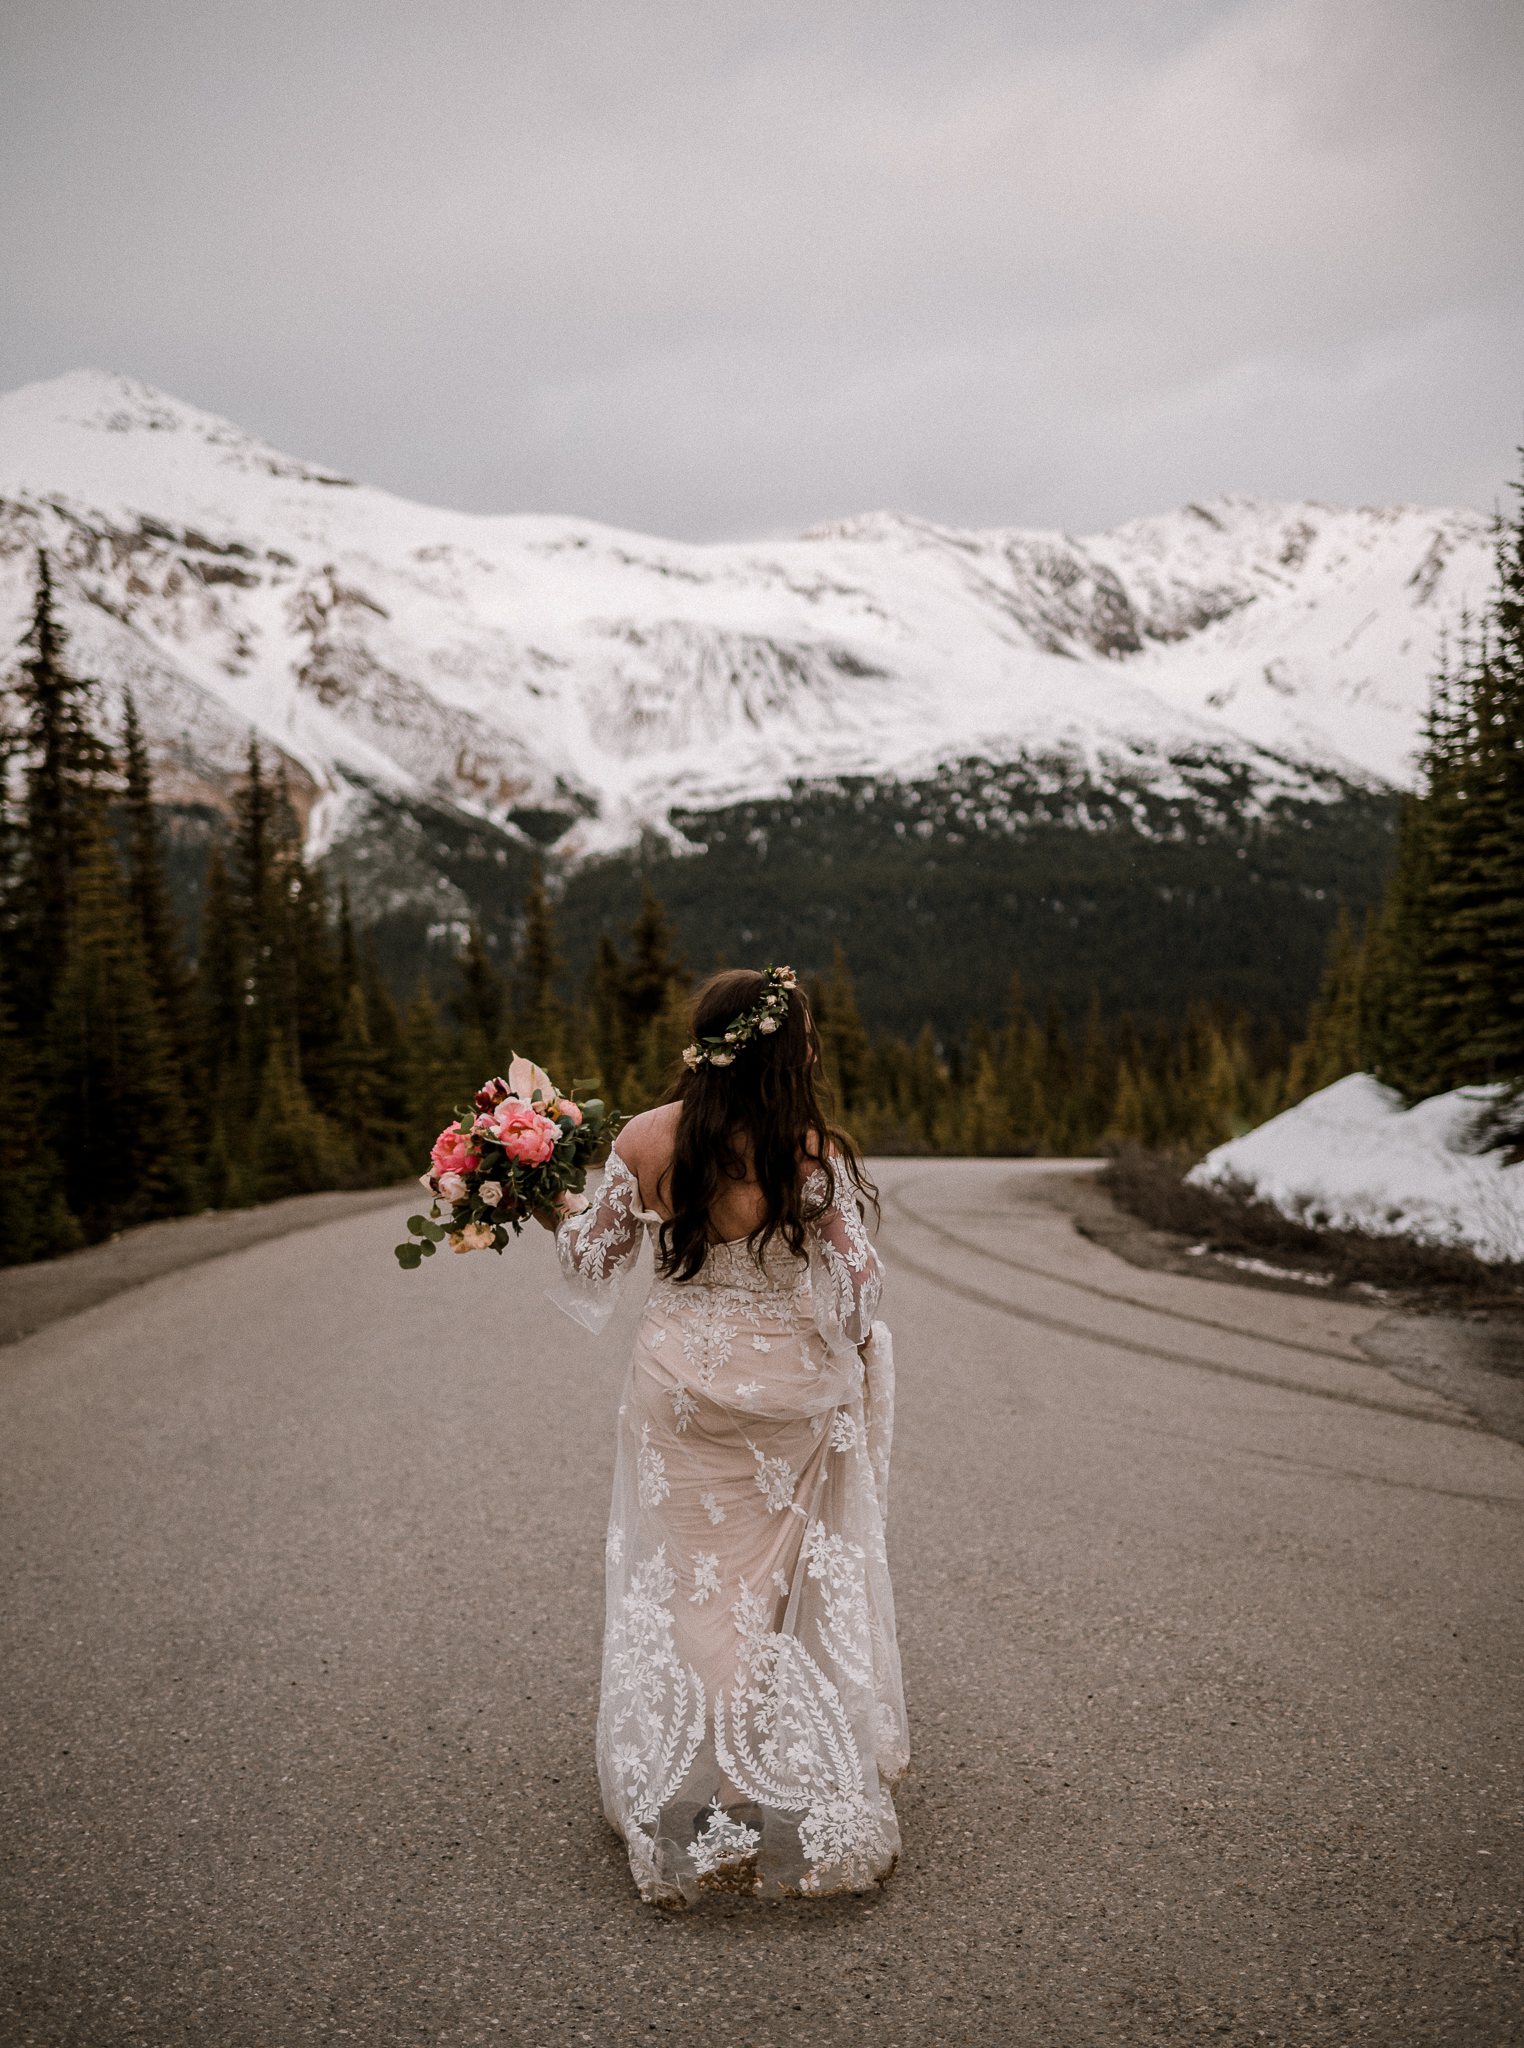 Bride holding bouquet walking away down an empty road